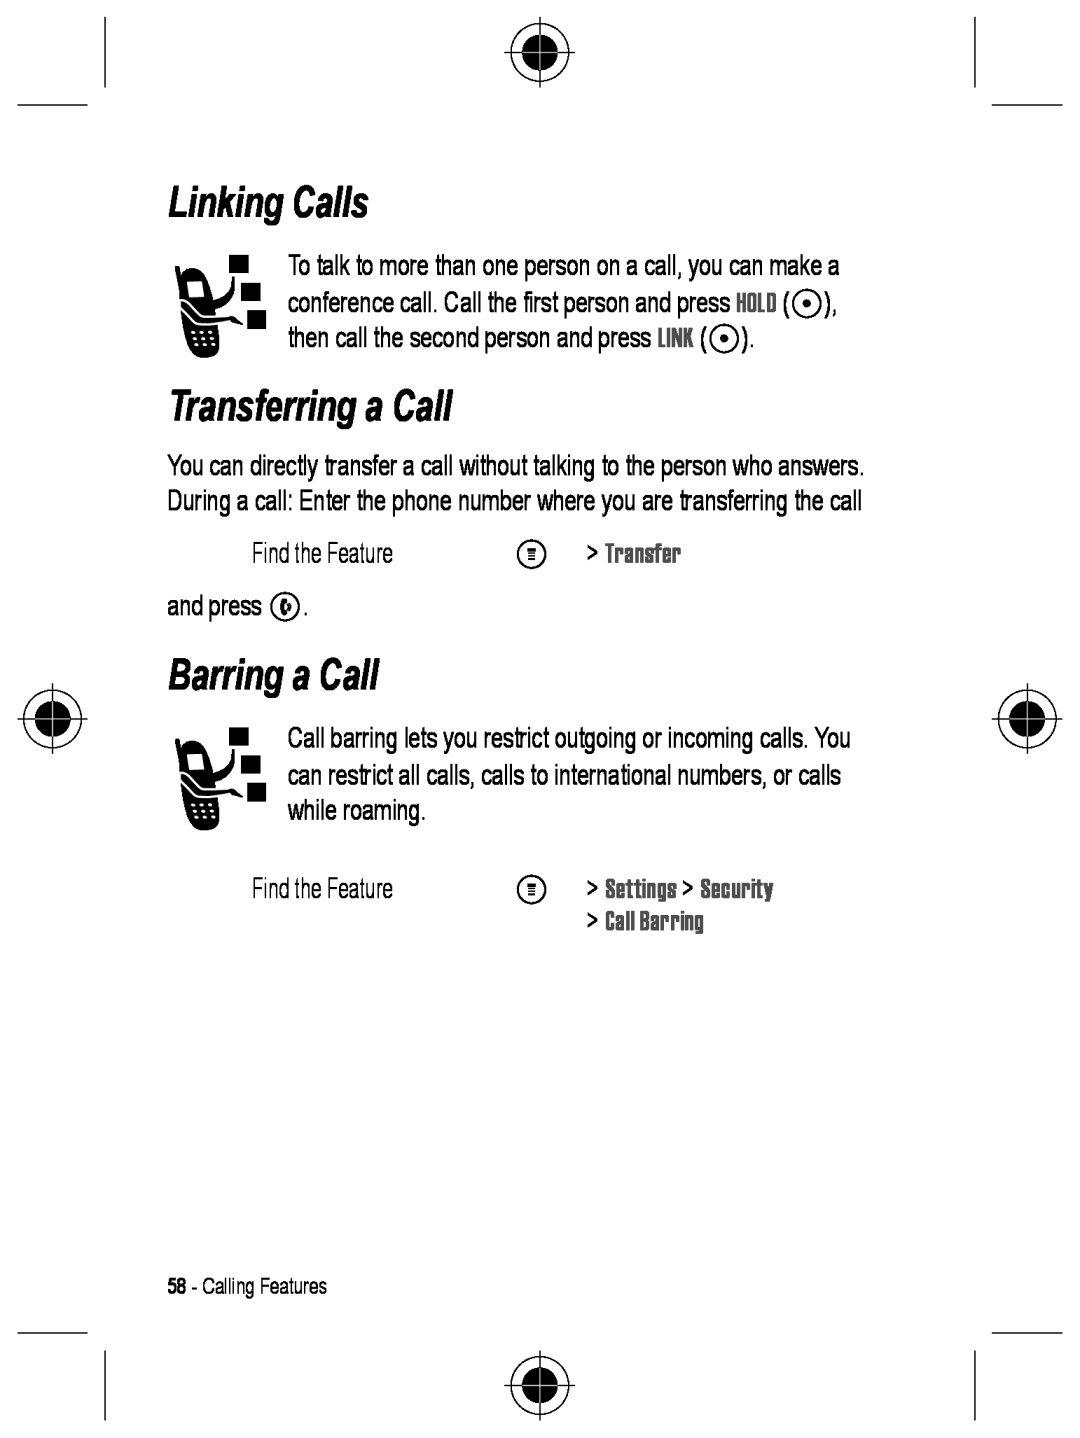 Motorola C330 manual Linking Calls, Transferring a Call, Barring a Call, M Transfer, M Settings Security 